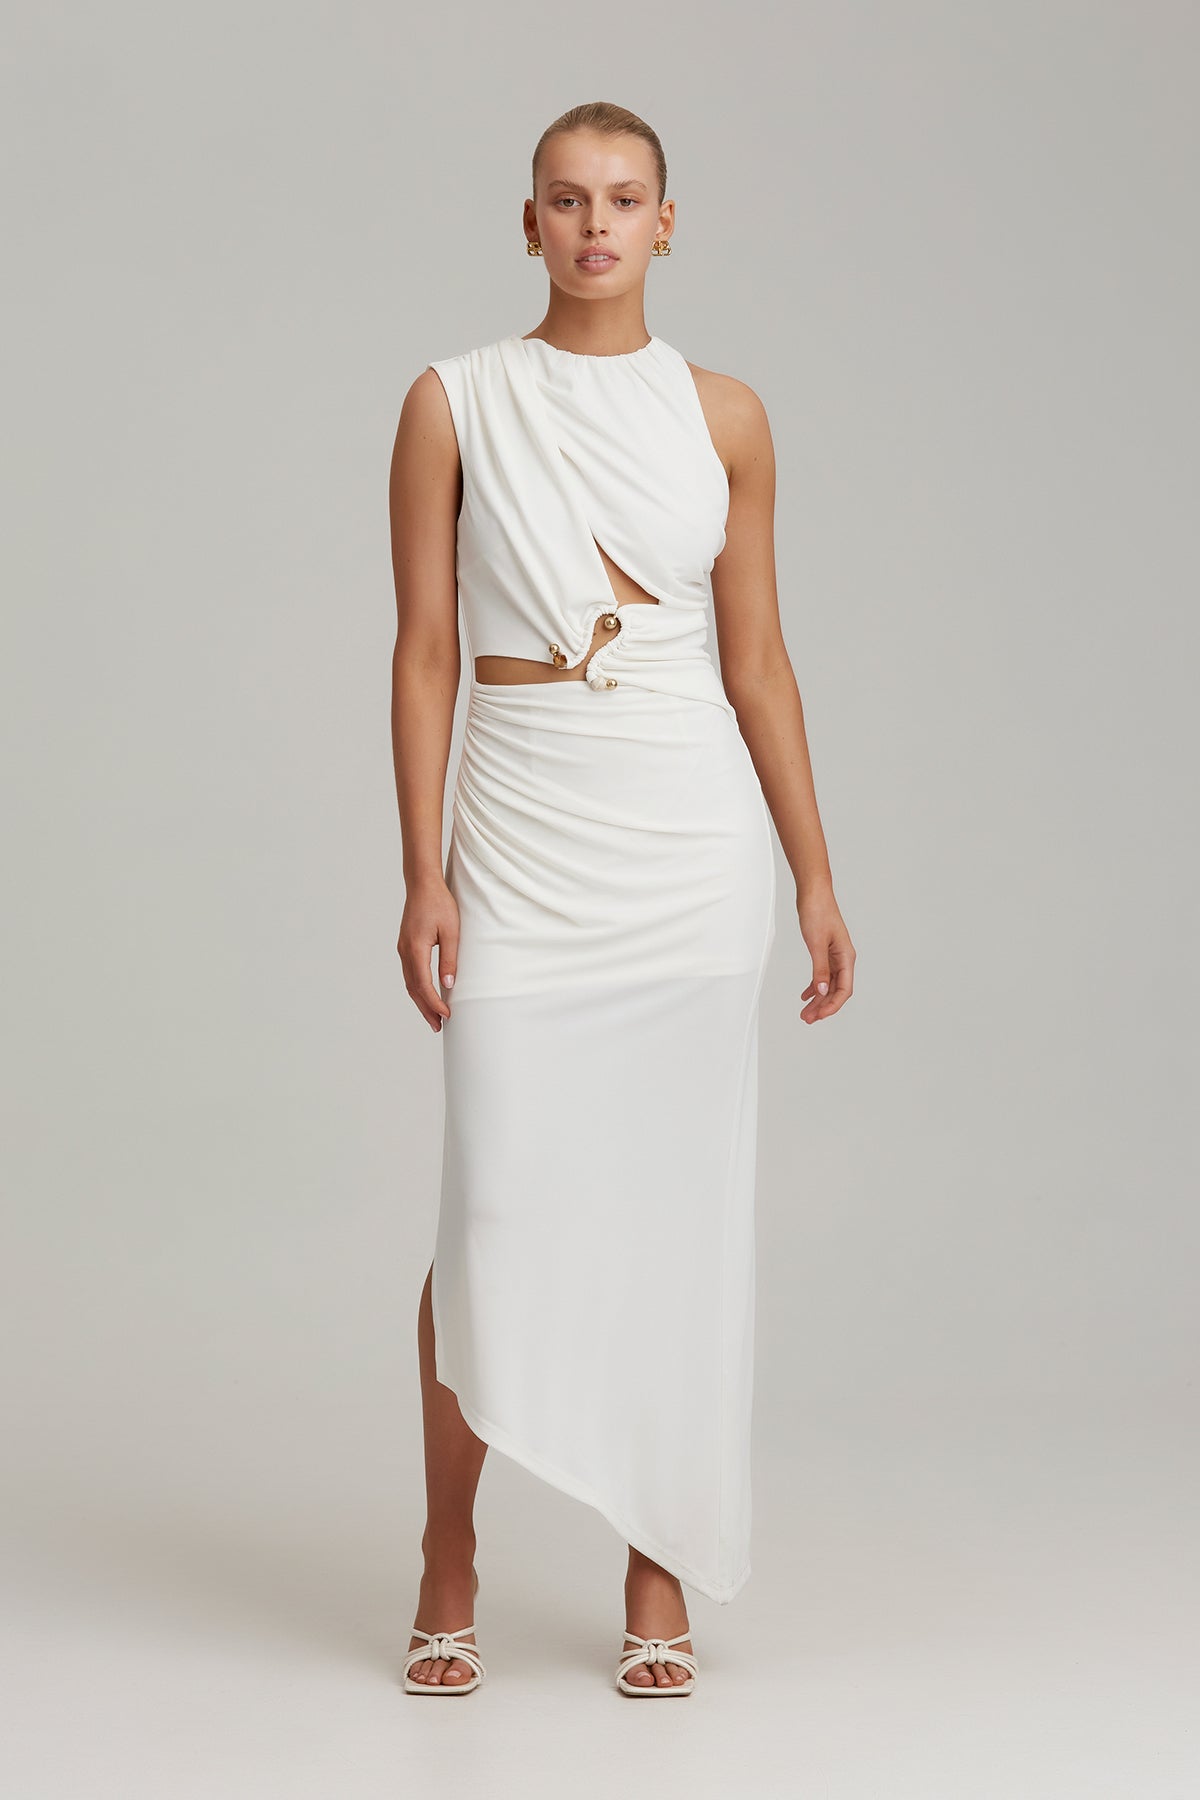 C/MEO Collective - Entropy Dress - White